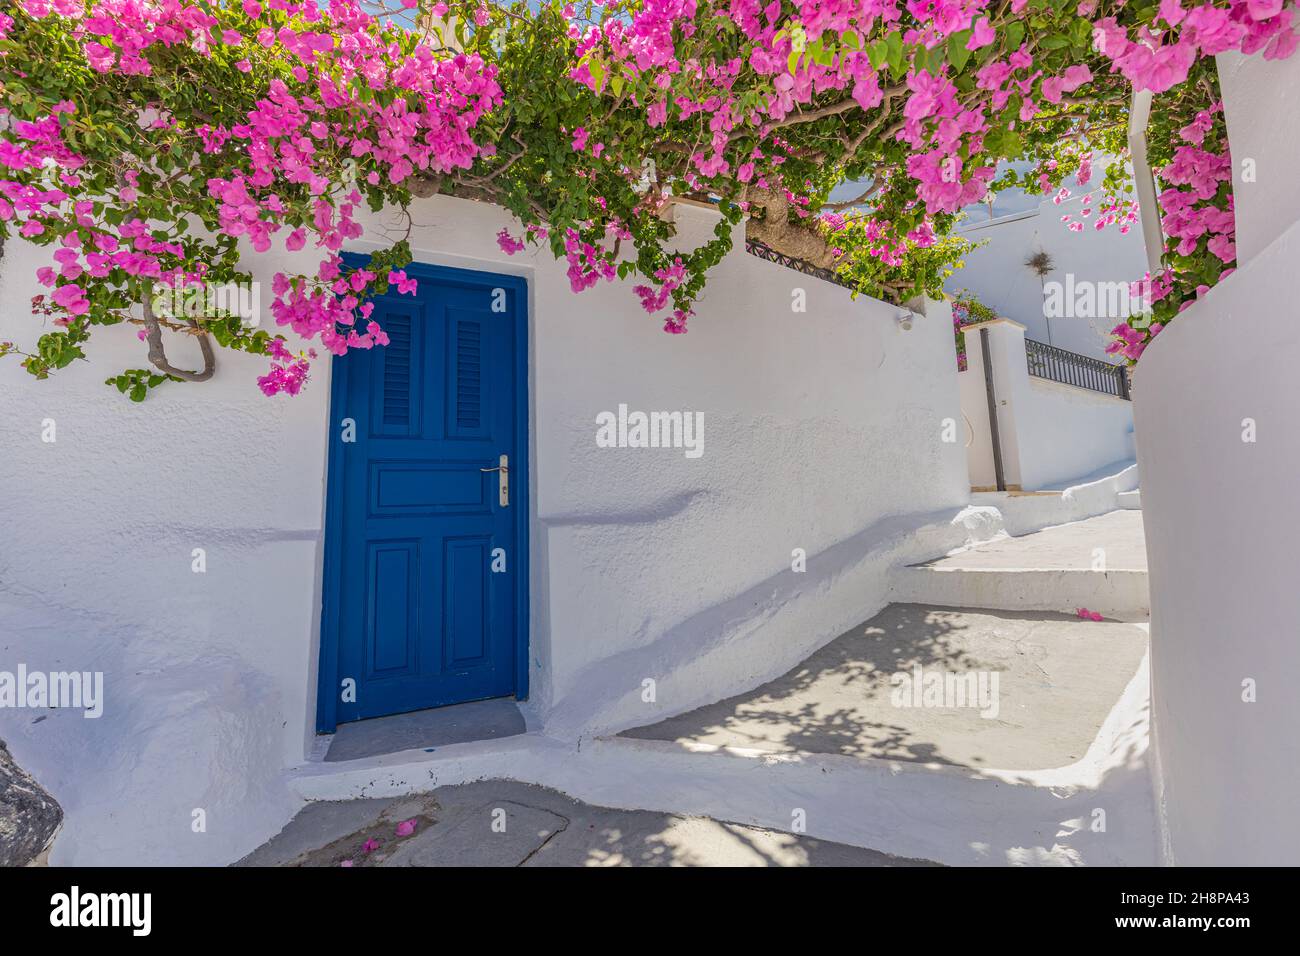 Romantic blue door with pink flowers, idyllic nature. Couple honeymoon destination, urban street banner. Santorini, Greece Stock Photo